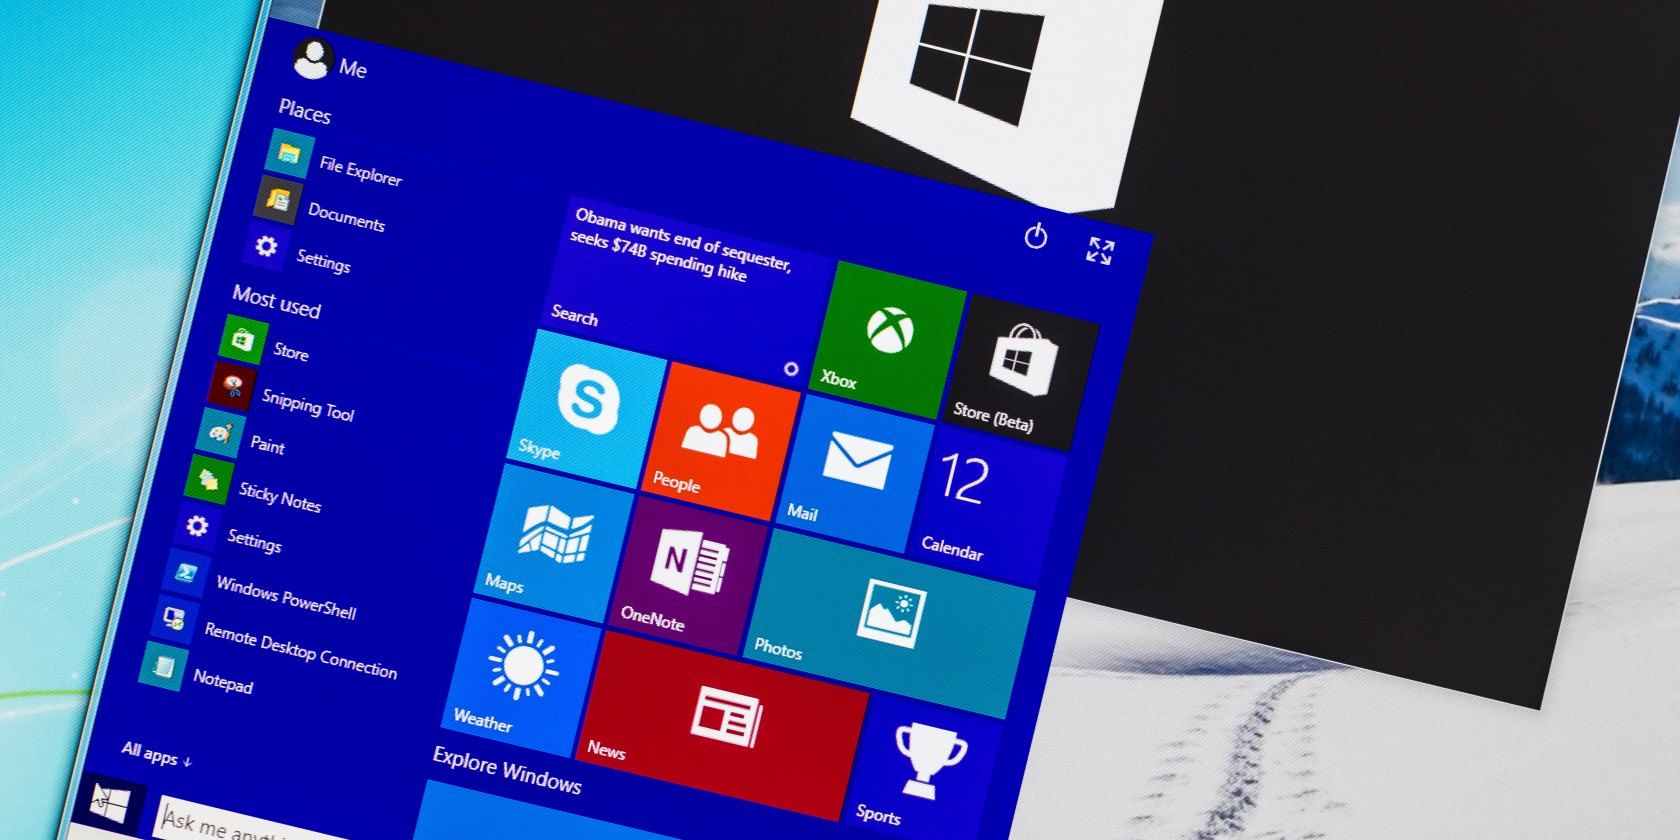 The Windows 10 start menu